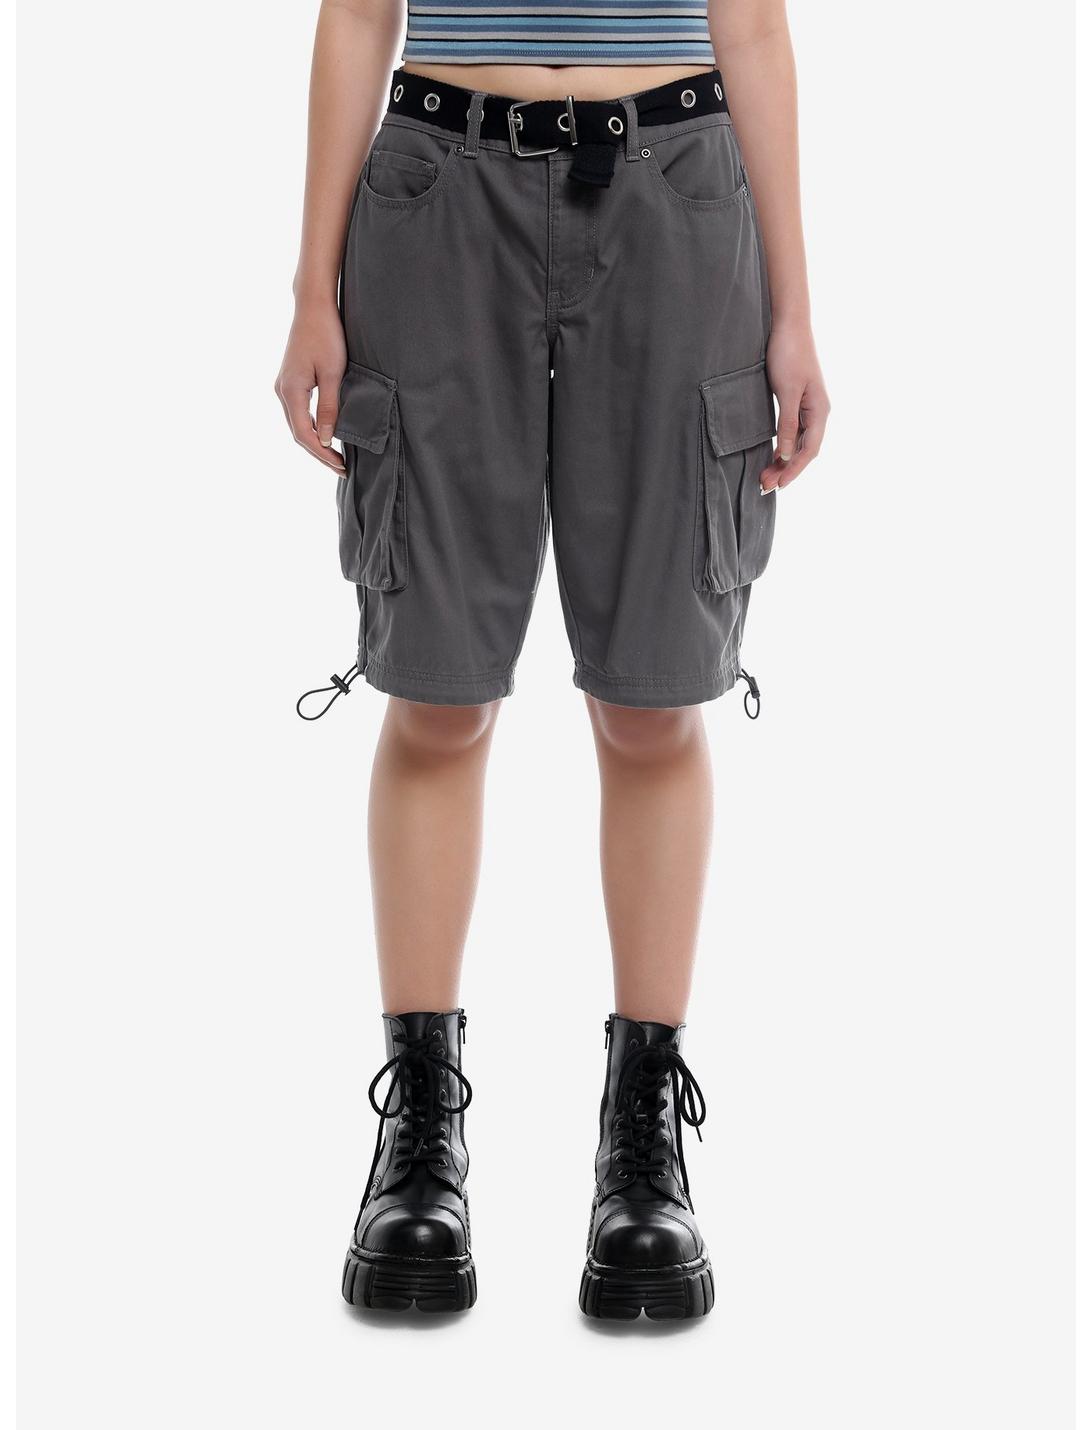 Grey Cargo Shorts With Grommet Belt, DARK BLUE, hi-res